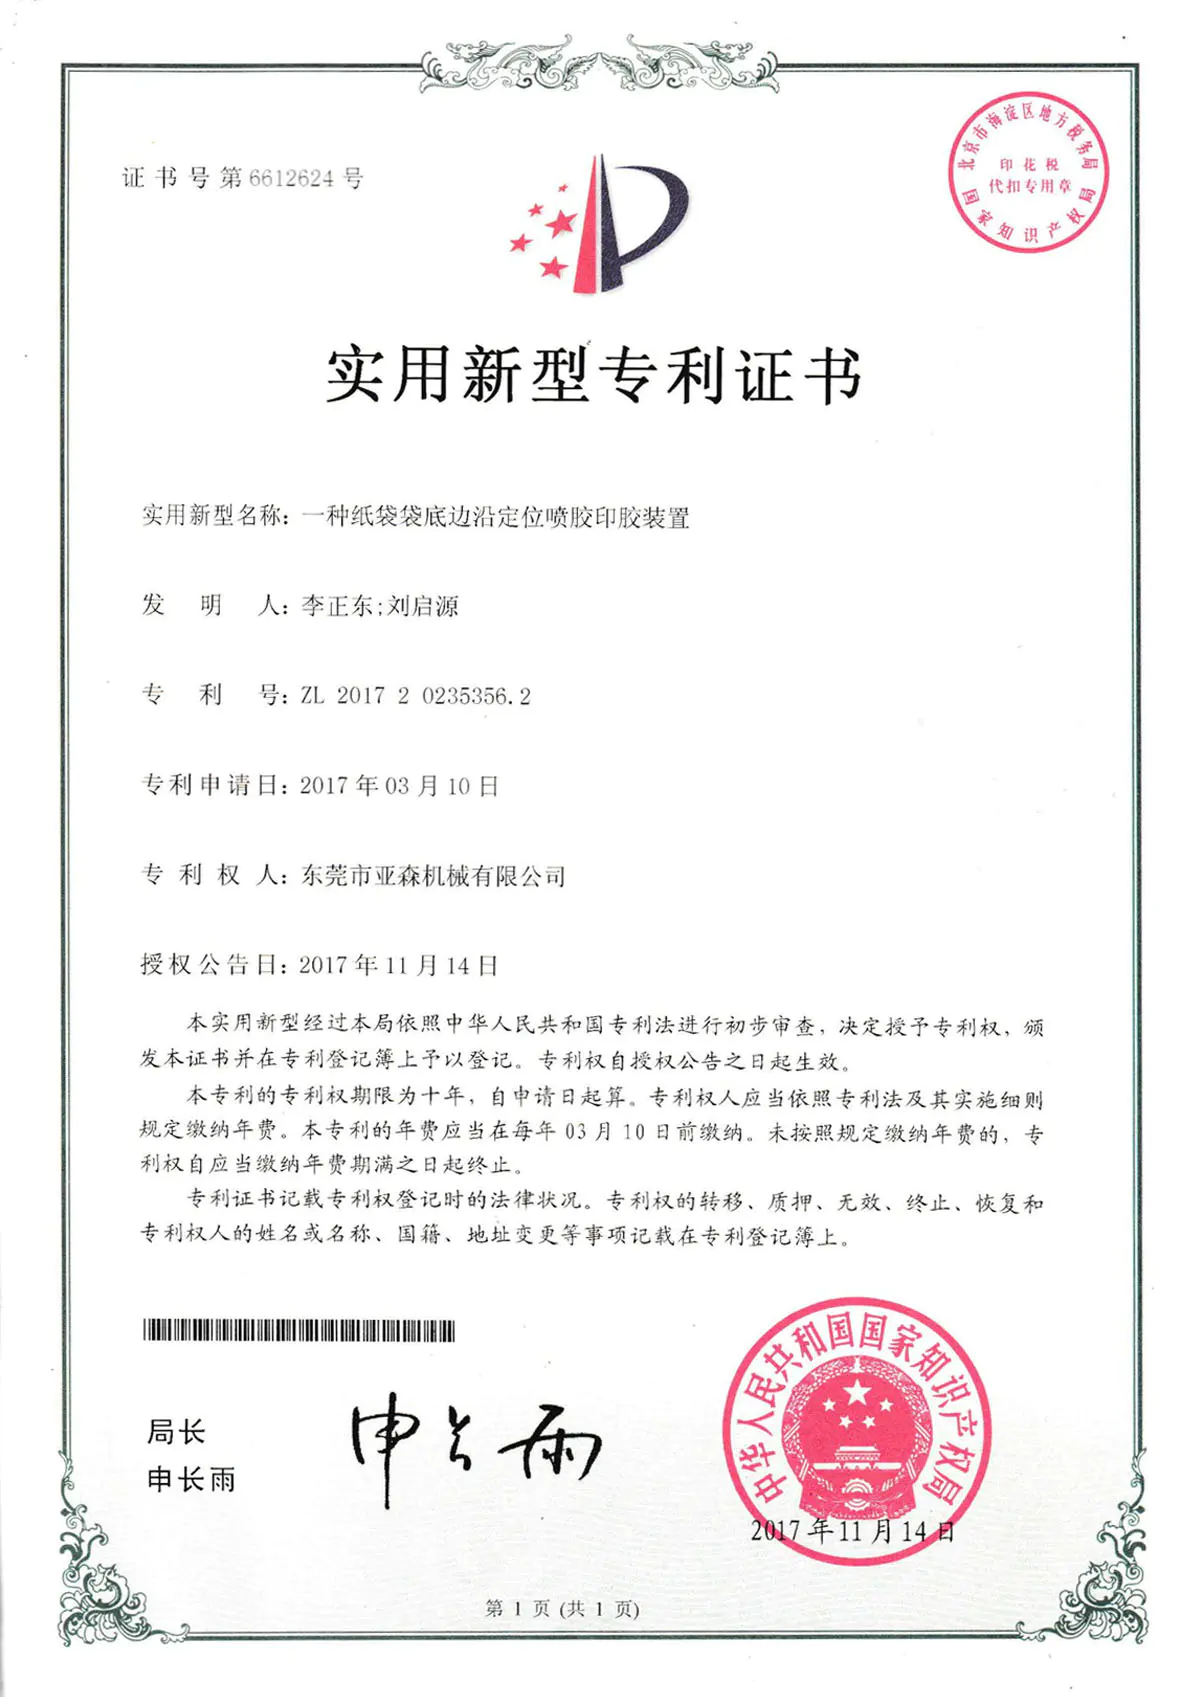 Patent Certificate 5